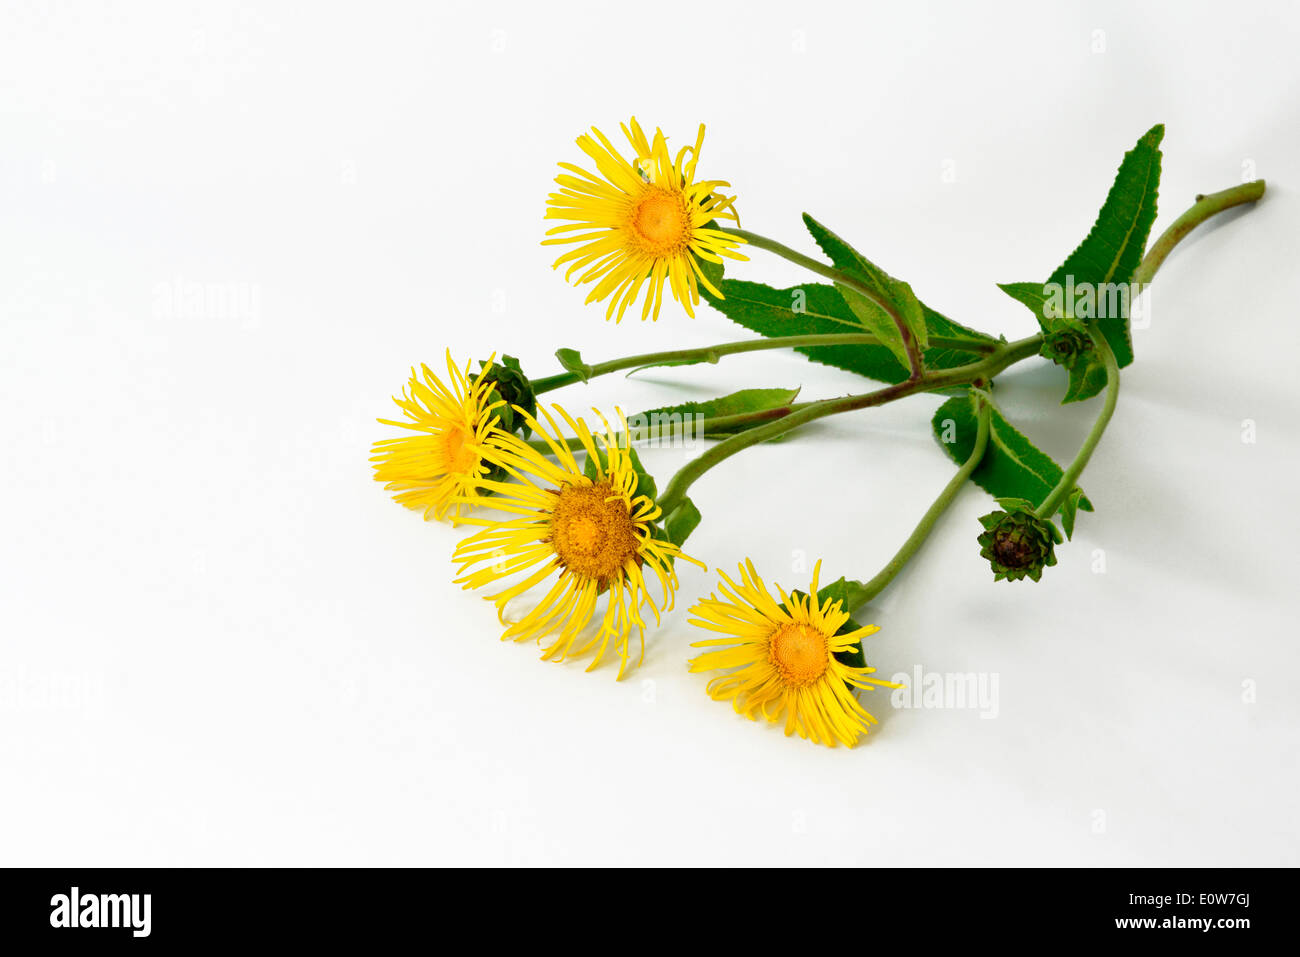 Elecampane (Inula helenium), flowering stalk. Studio picture against a white background Stock Photo